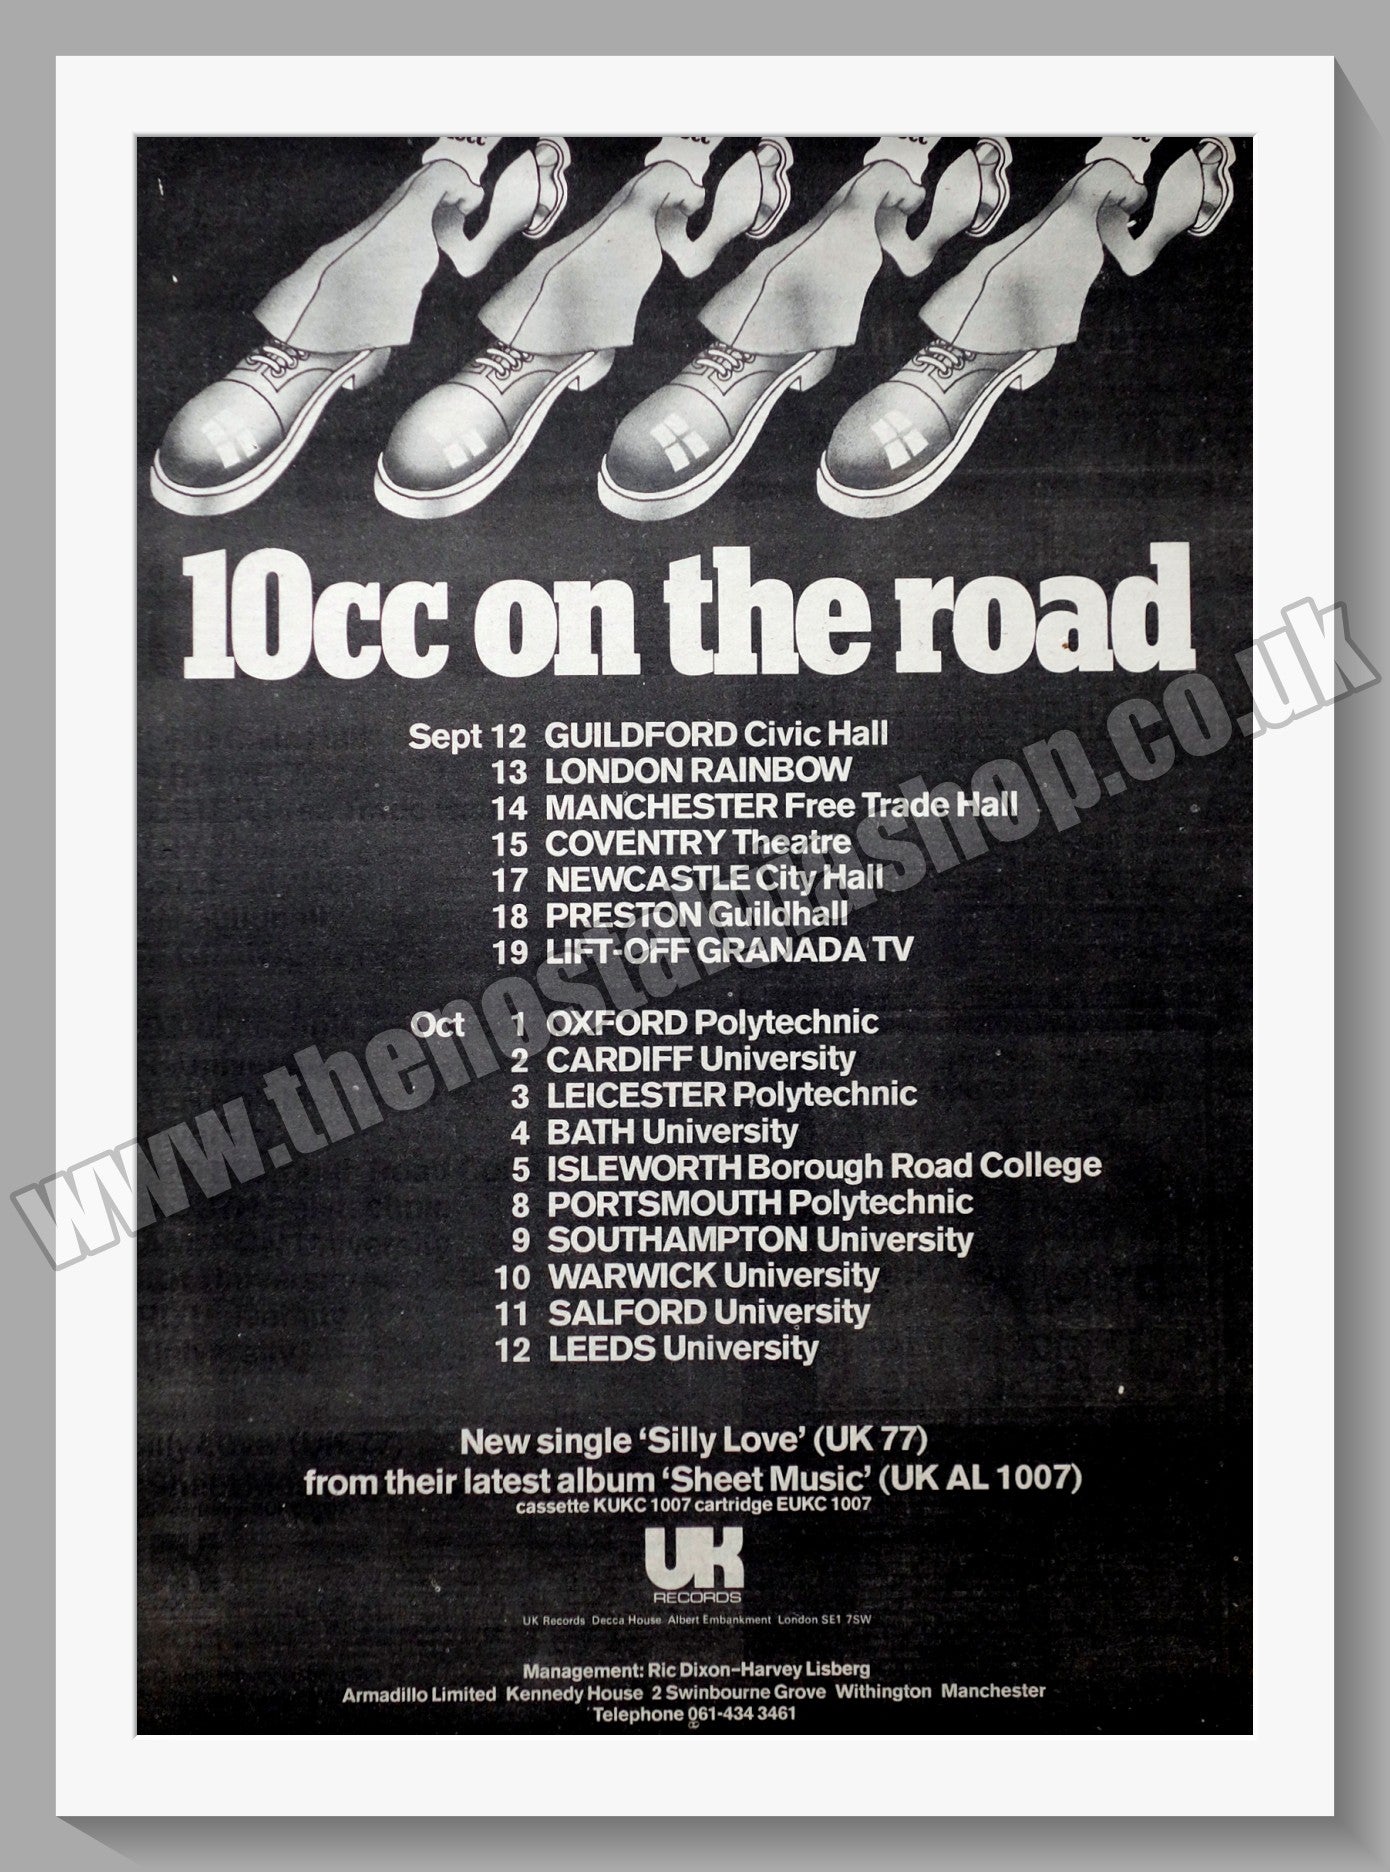 10cc On The Road, UK Tour. Original Advert 1974 (ref AD14221)